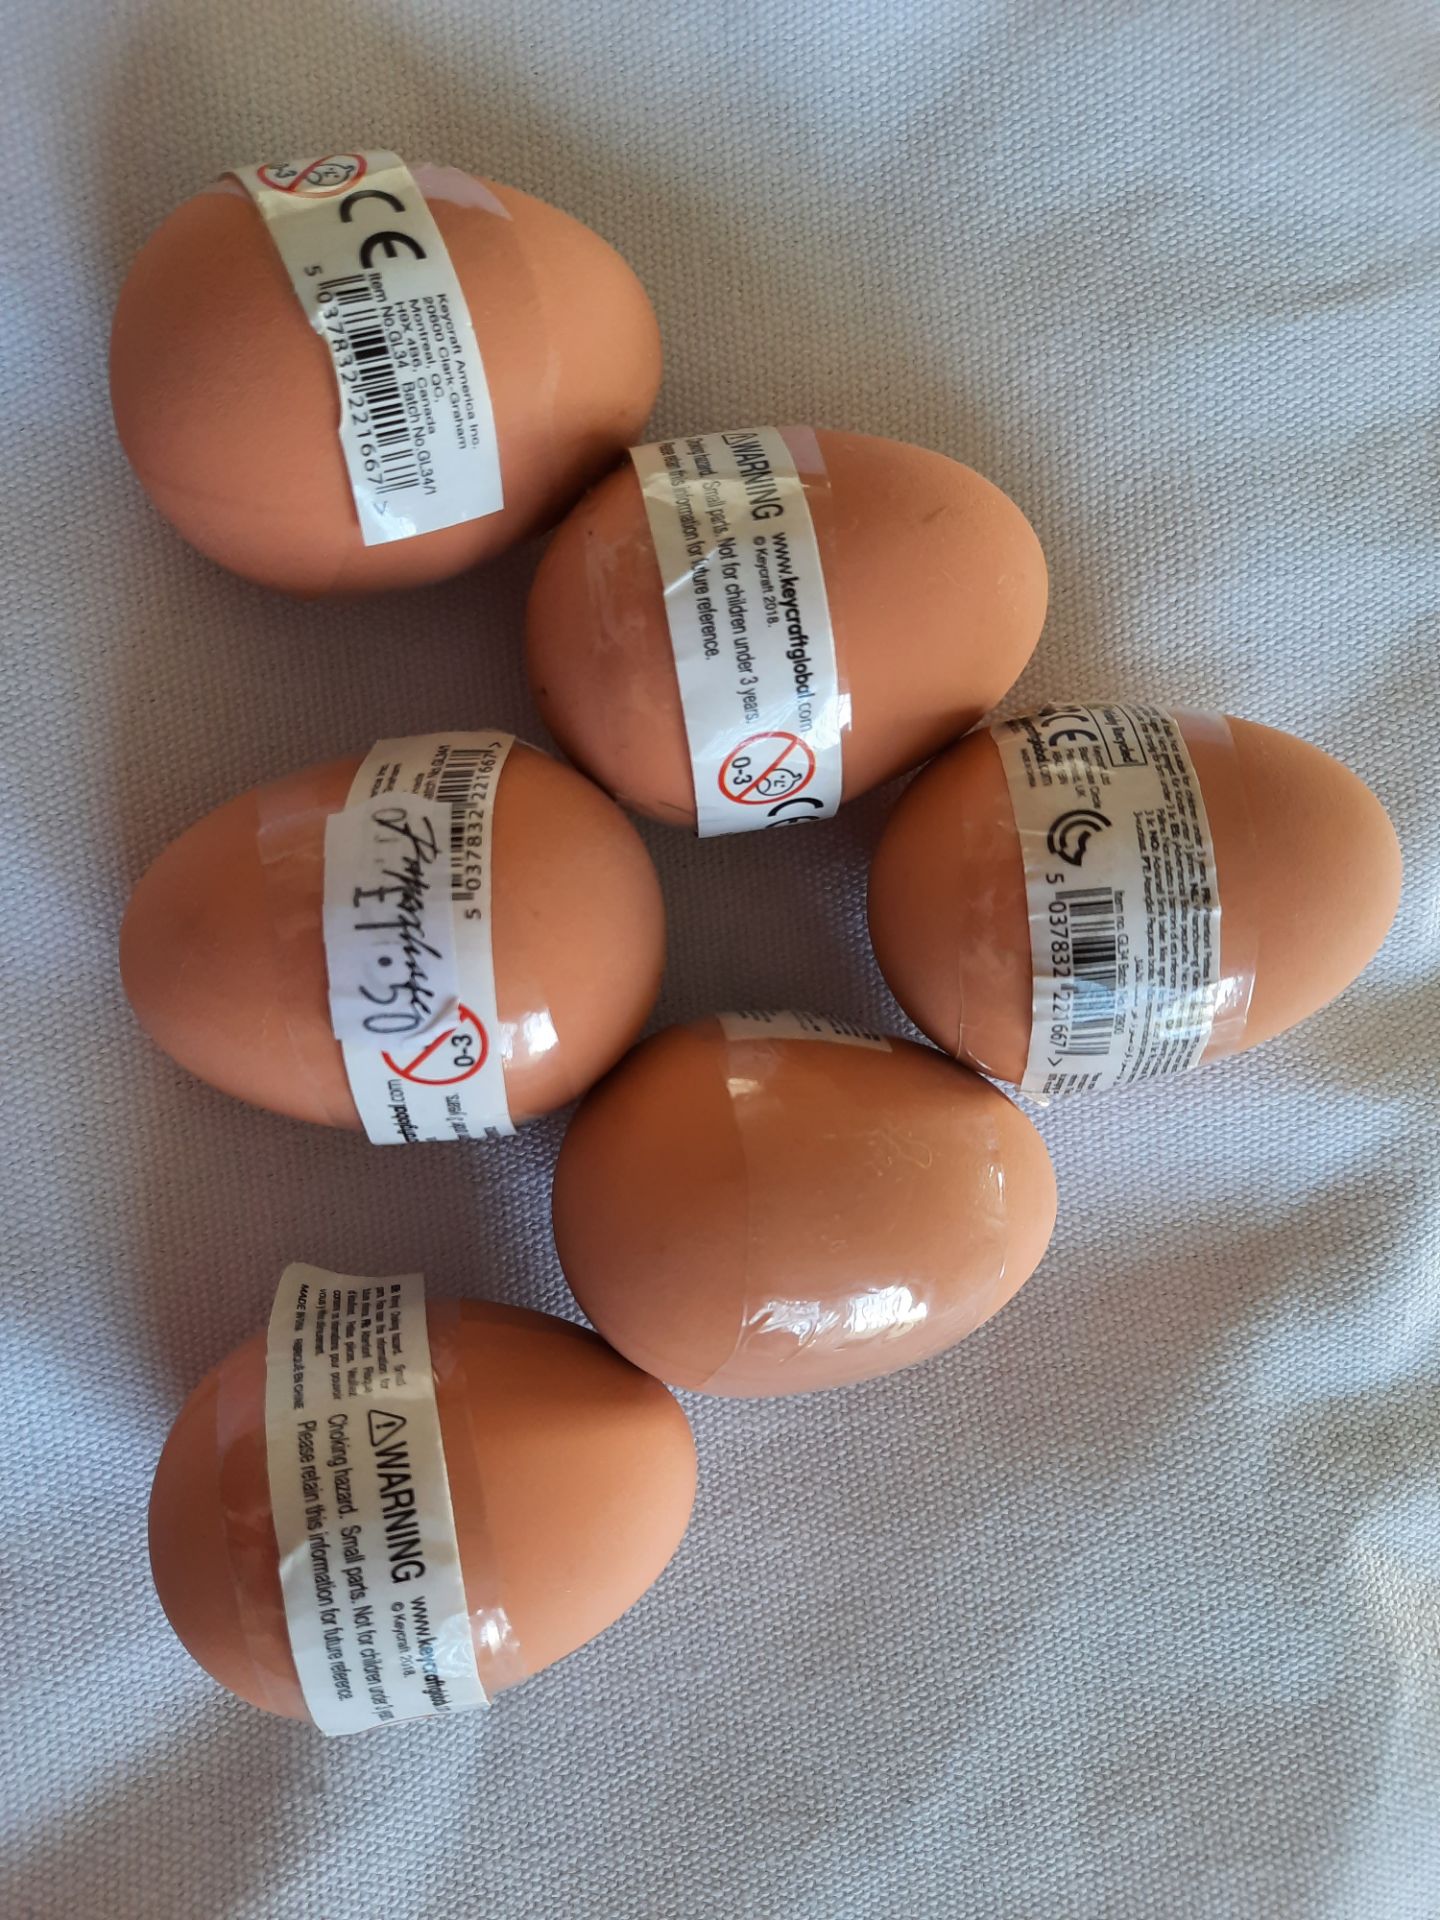 Bouncy Eggs - Box of 20 RRP £1.50 Each - Image 2 of 2